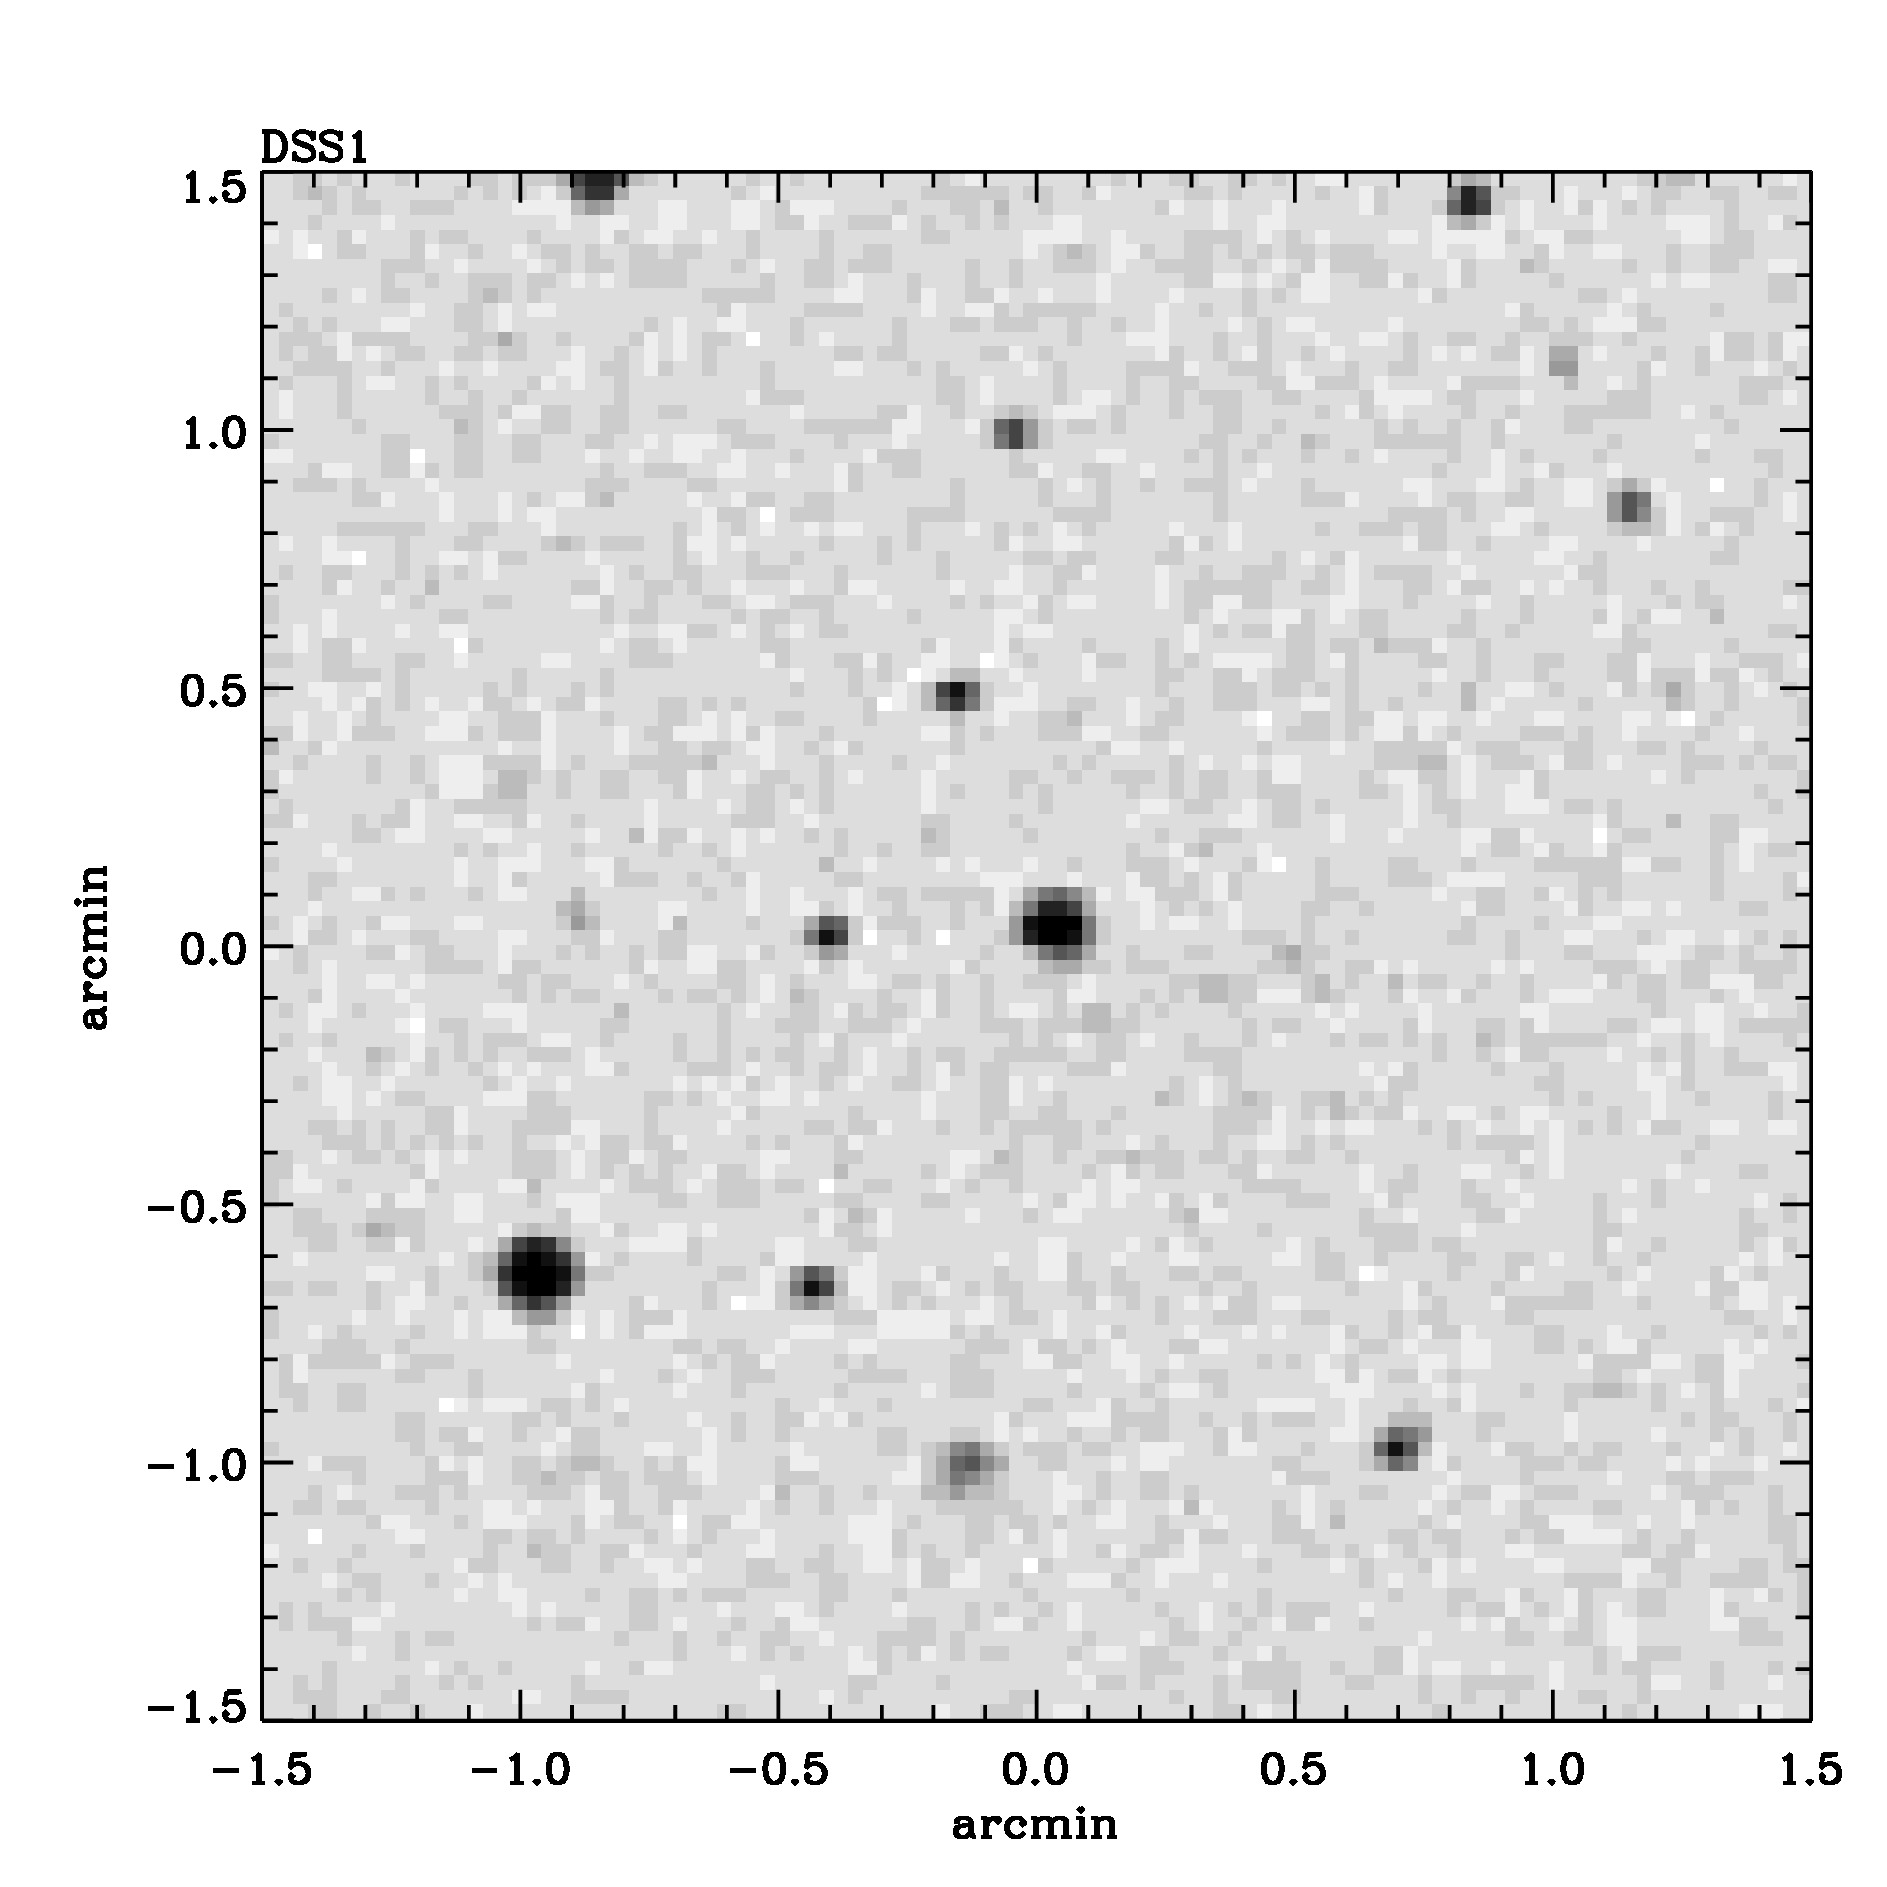 Optical image for SWIFT J1436.8-1615